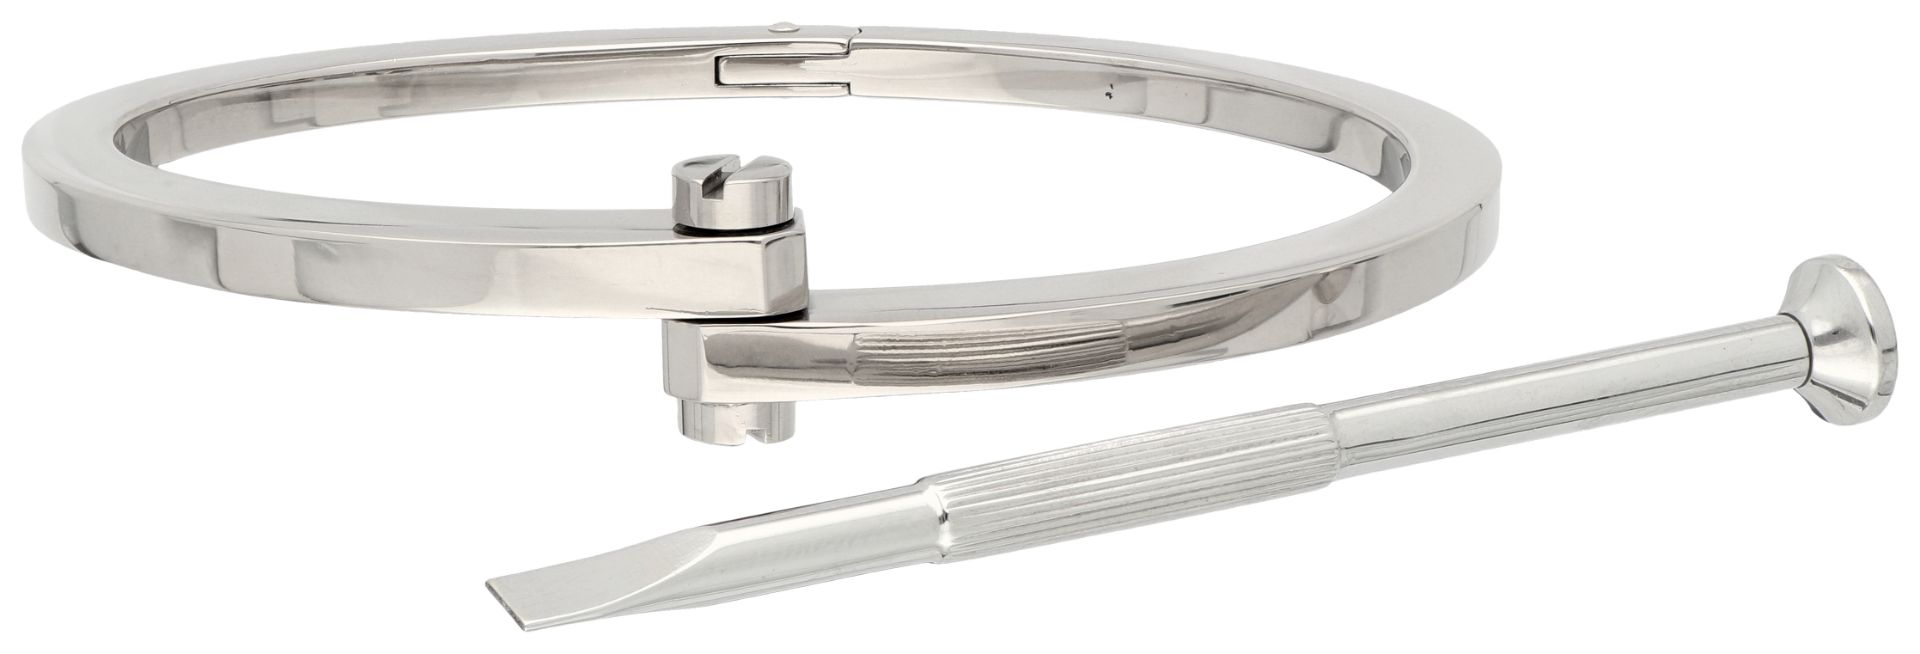 No Reserve - Cartier Menotte 18K white gold bracelet bangle and screwdriver. - Image 2 of 4